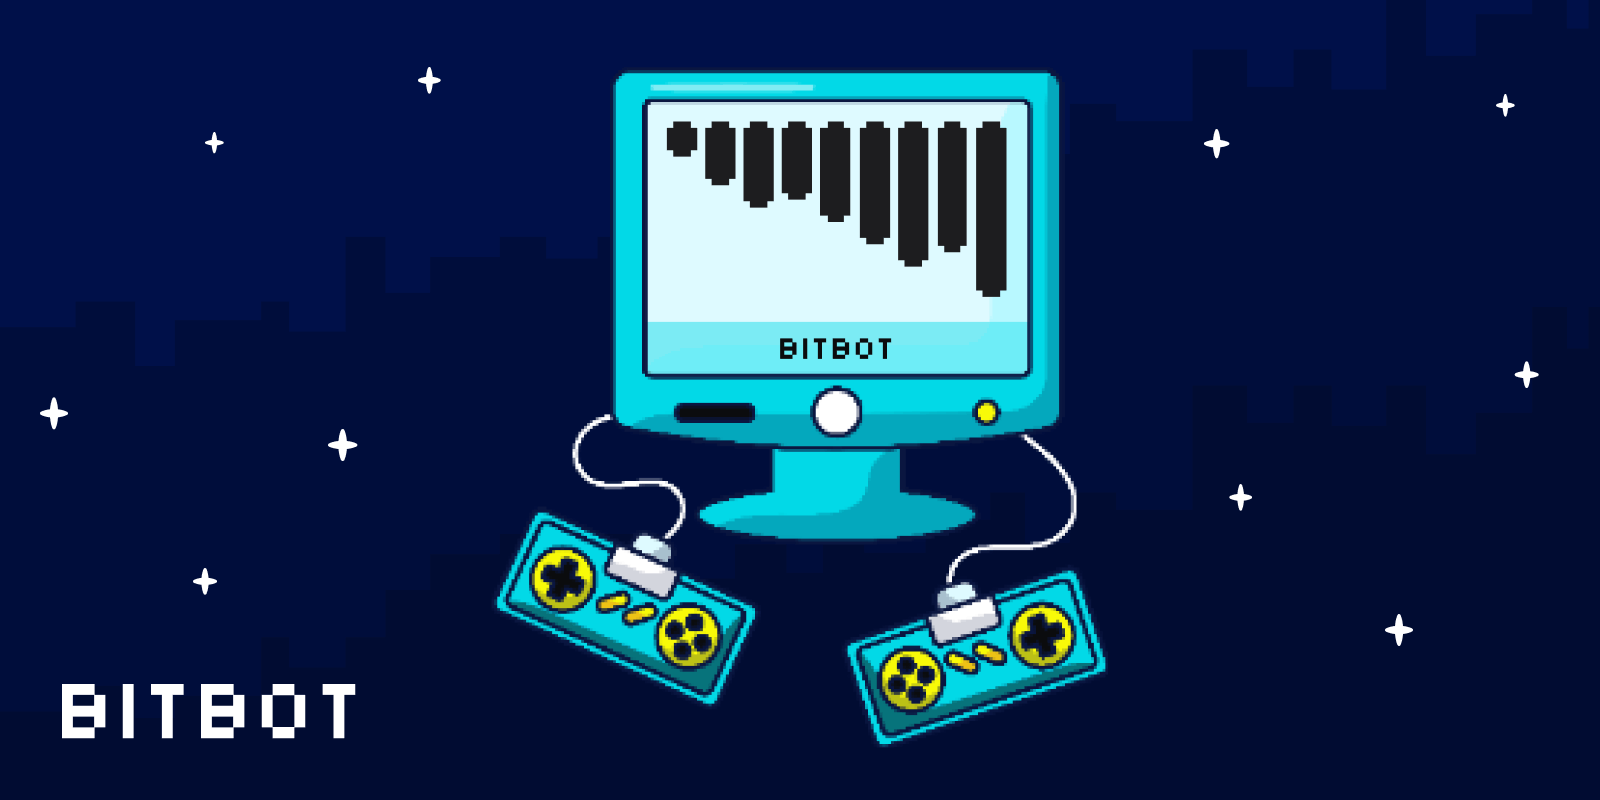 Retro komputer, logo BITBOT